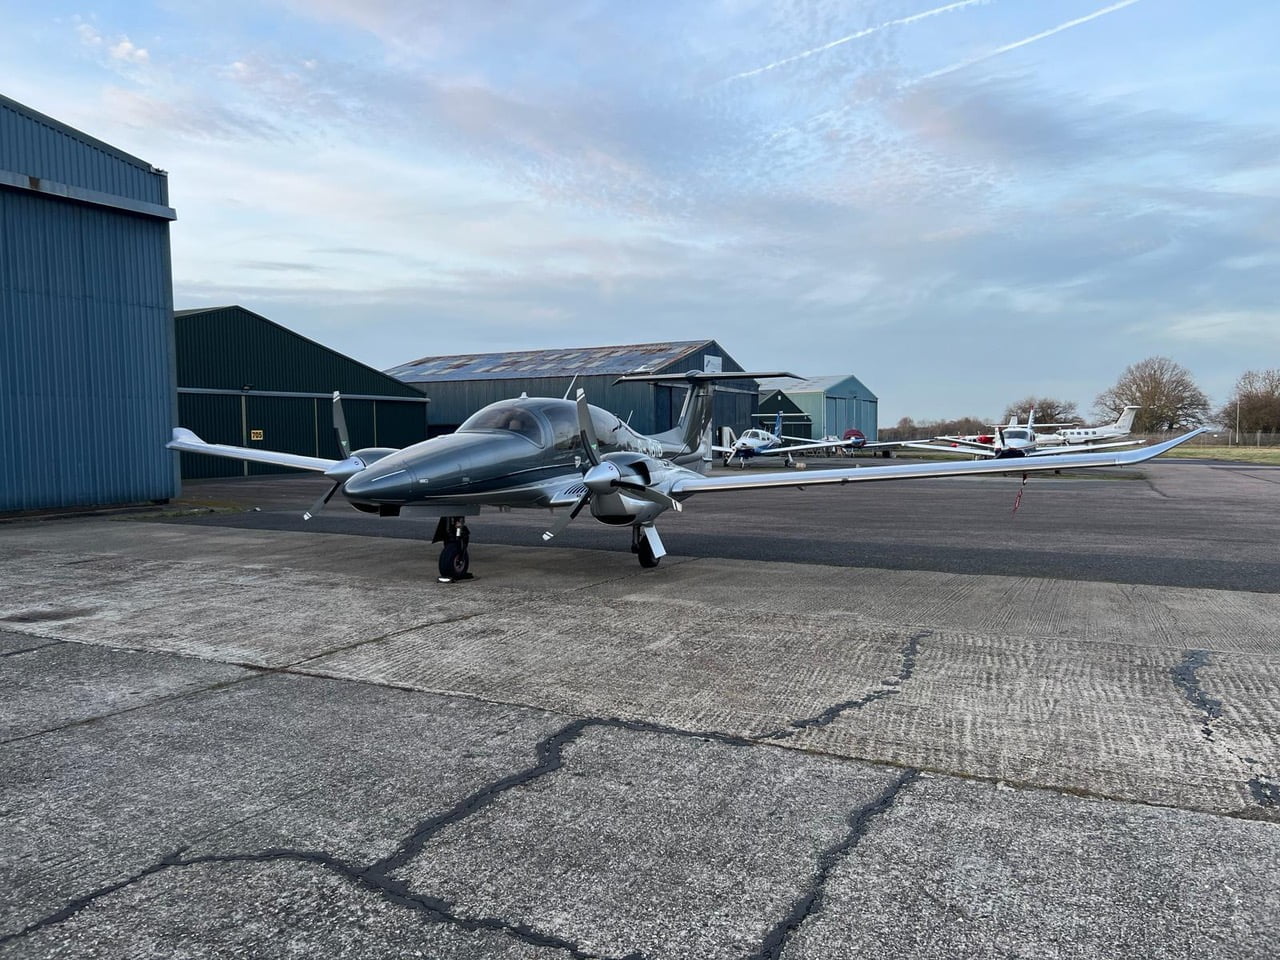 2019 Diamond DA62 Multi Engine Pistin Aircraft For Sale (G-JBIB) From Gemstone Aviation On AvPay aircraft exterior front left